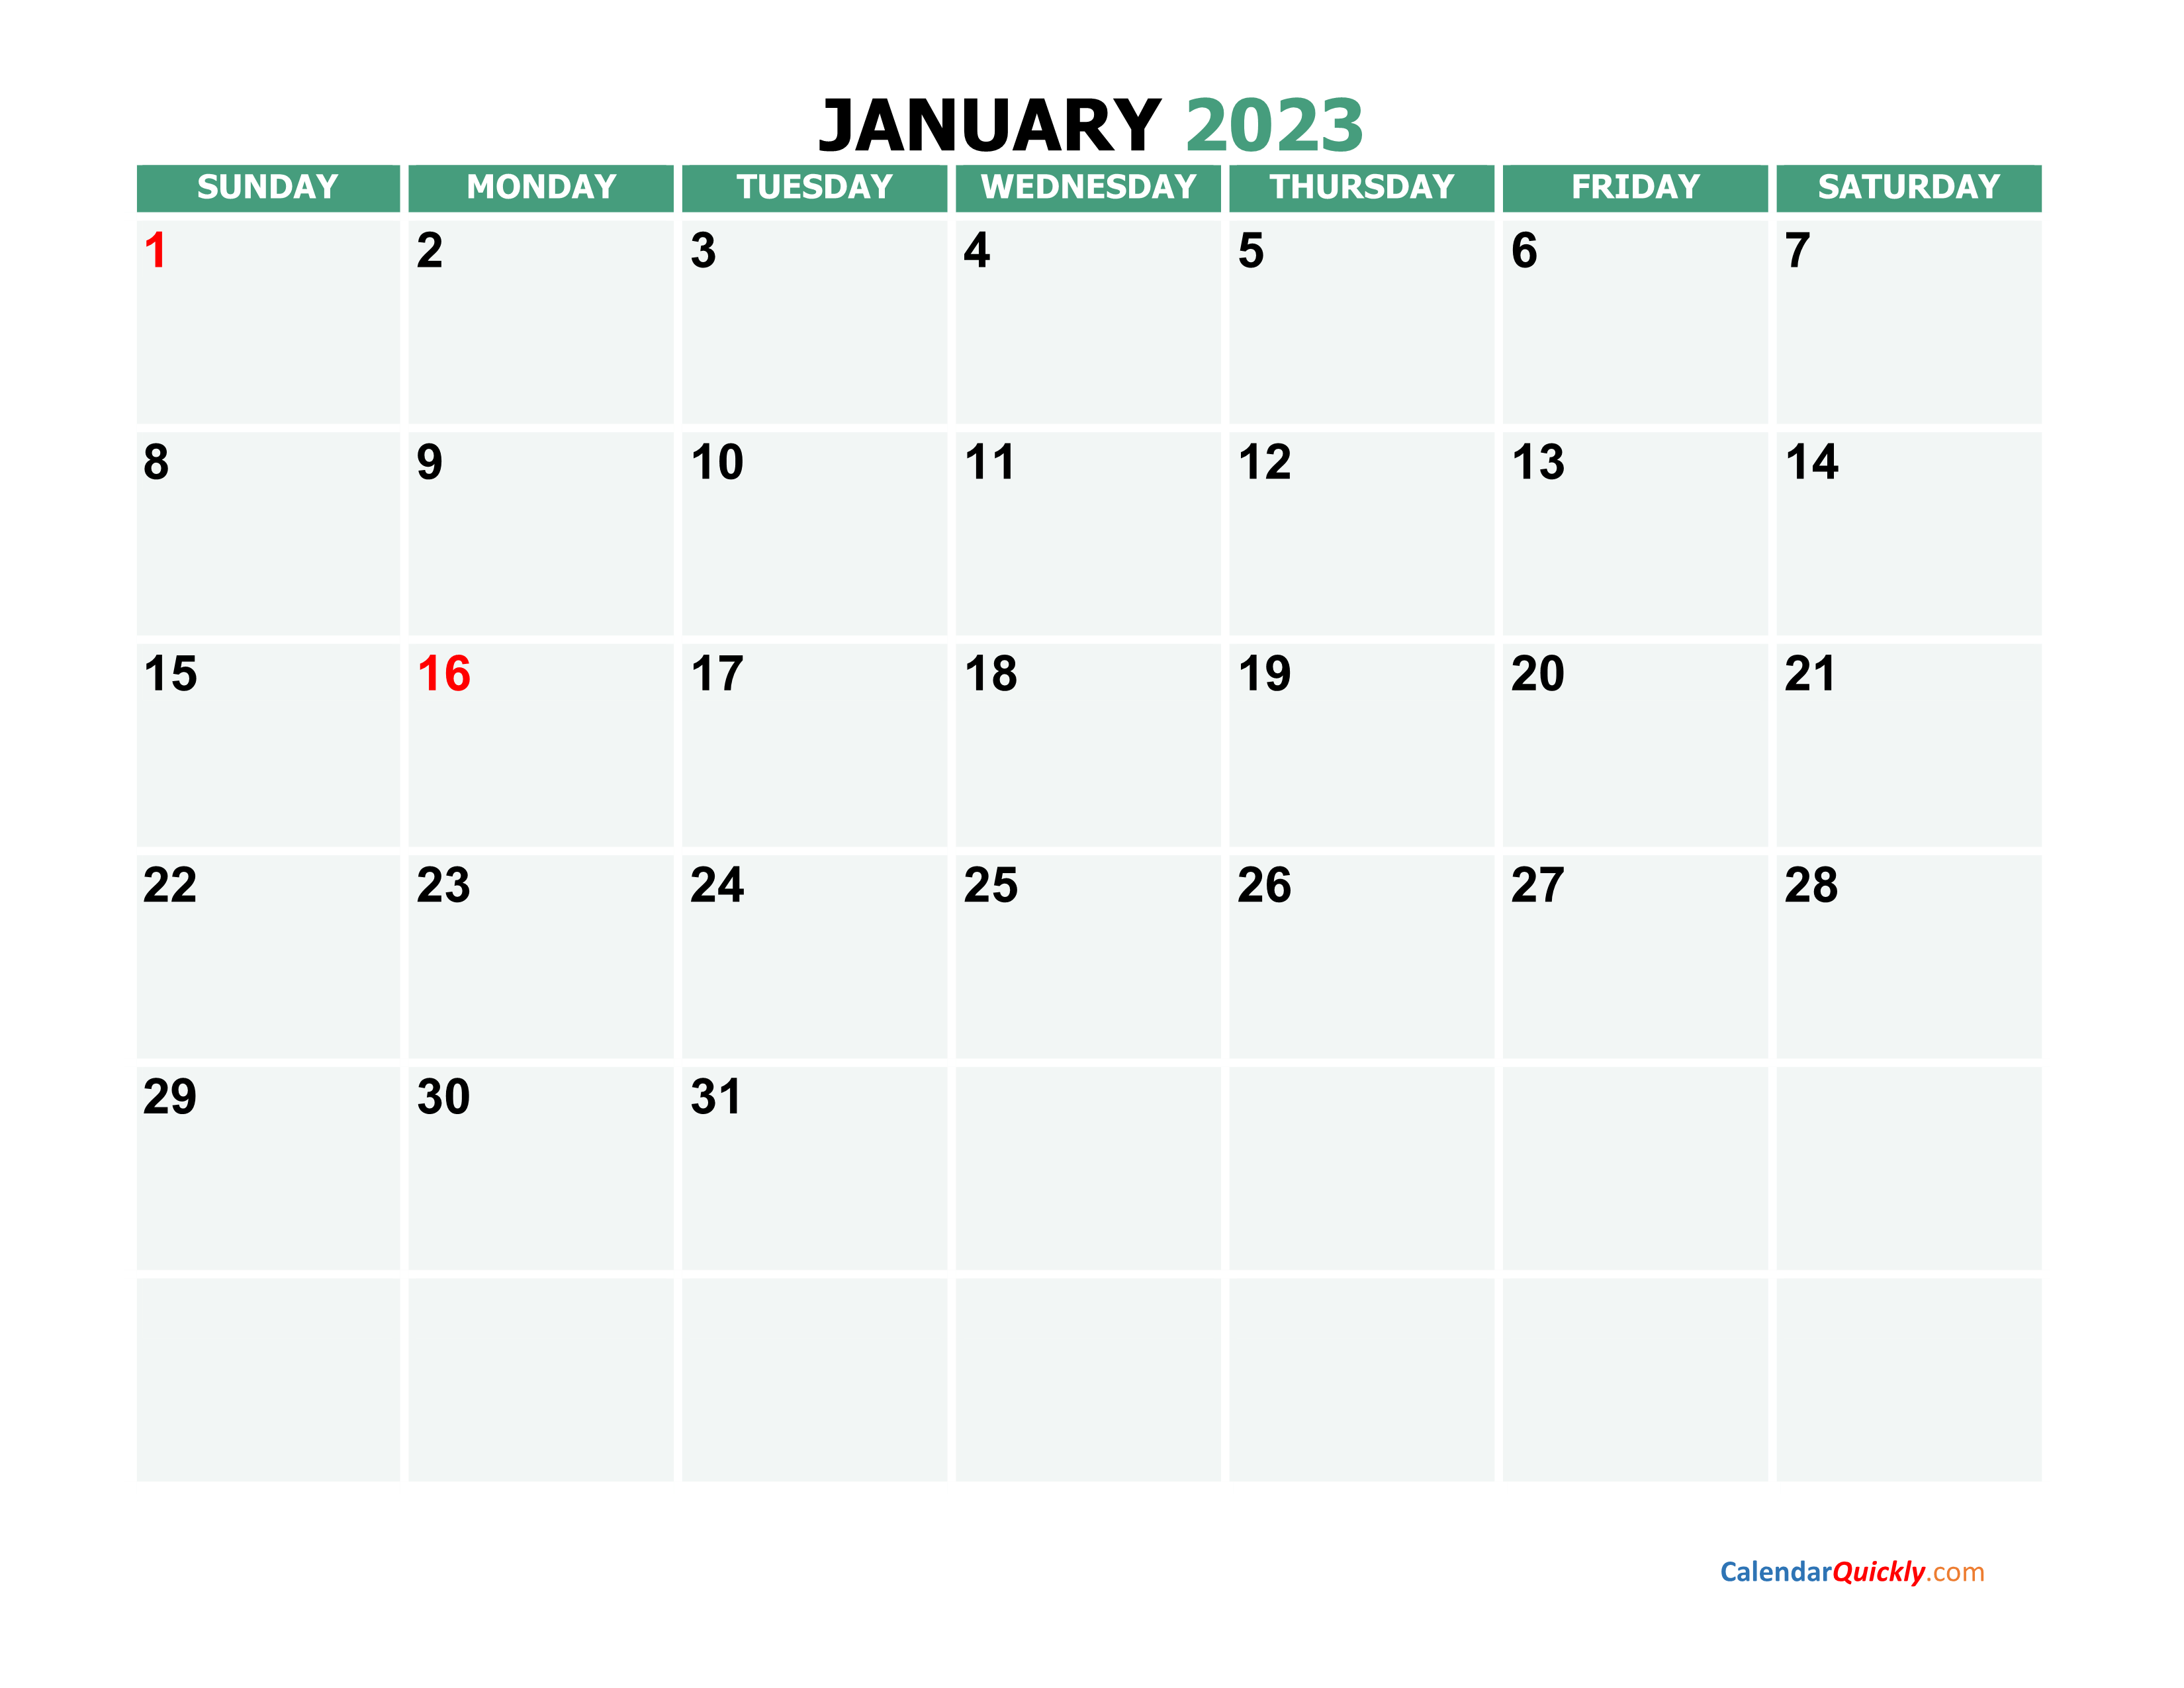 Monthly Calendar 2023 Printable Calendar Quickly Izeak